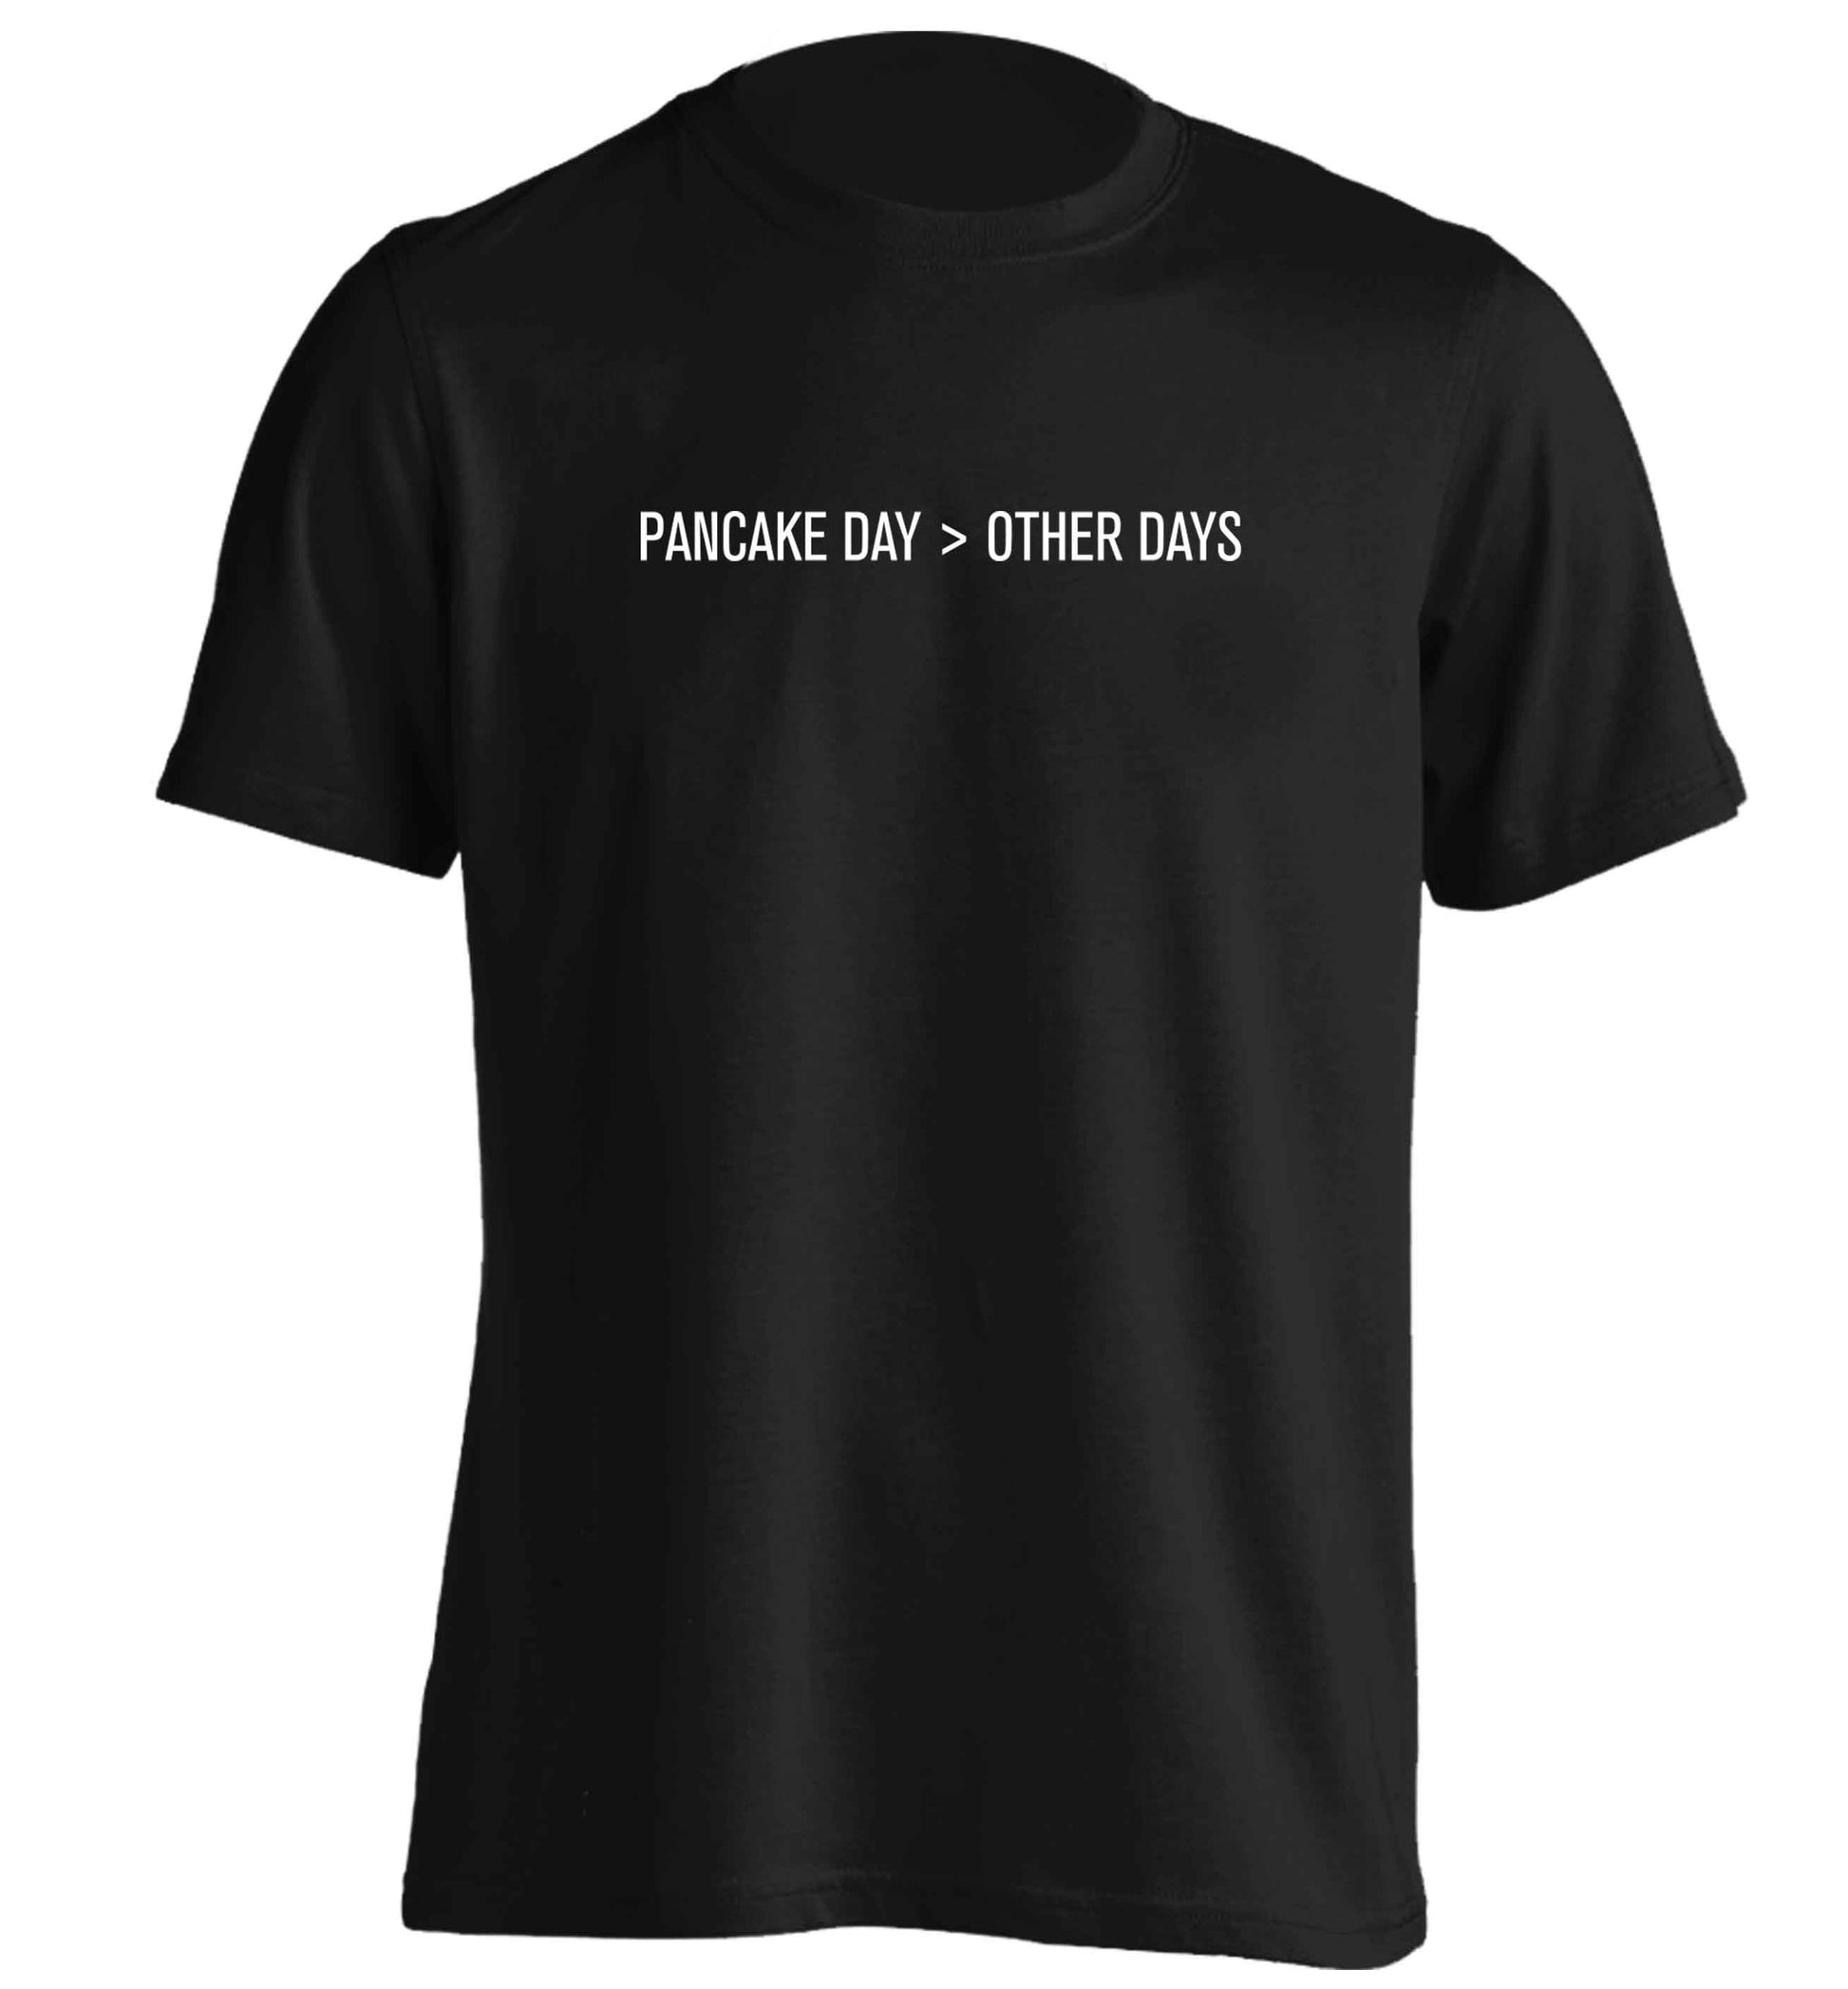 Pancake day > other days adults unisex black Tshirt 2XL